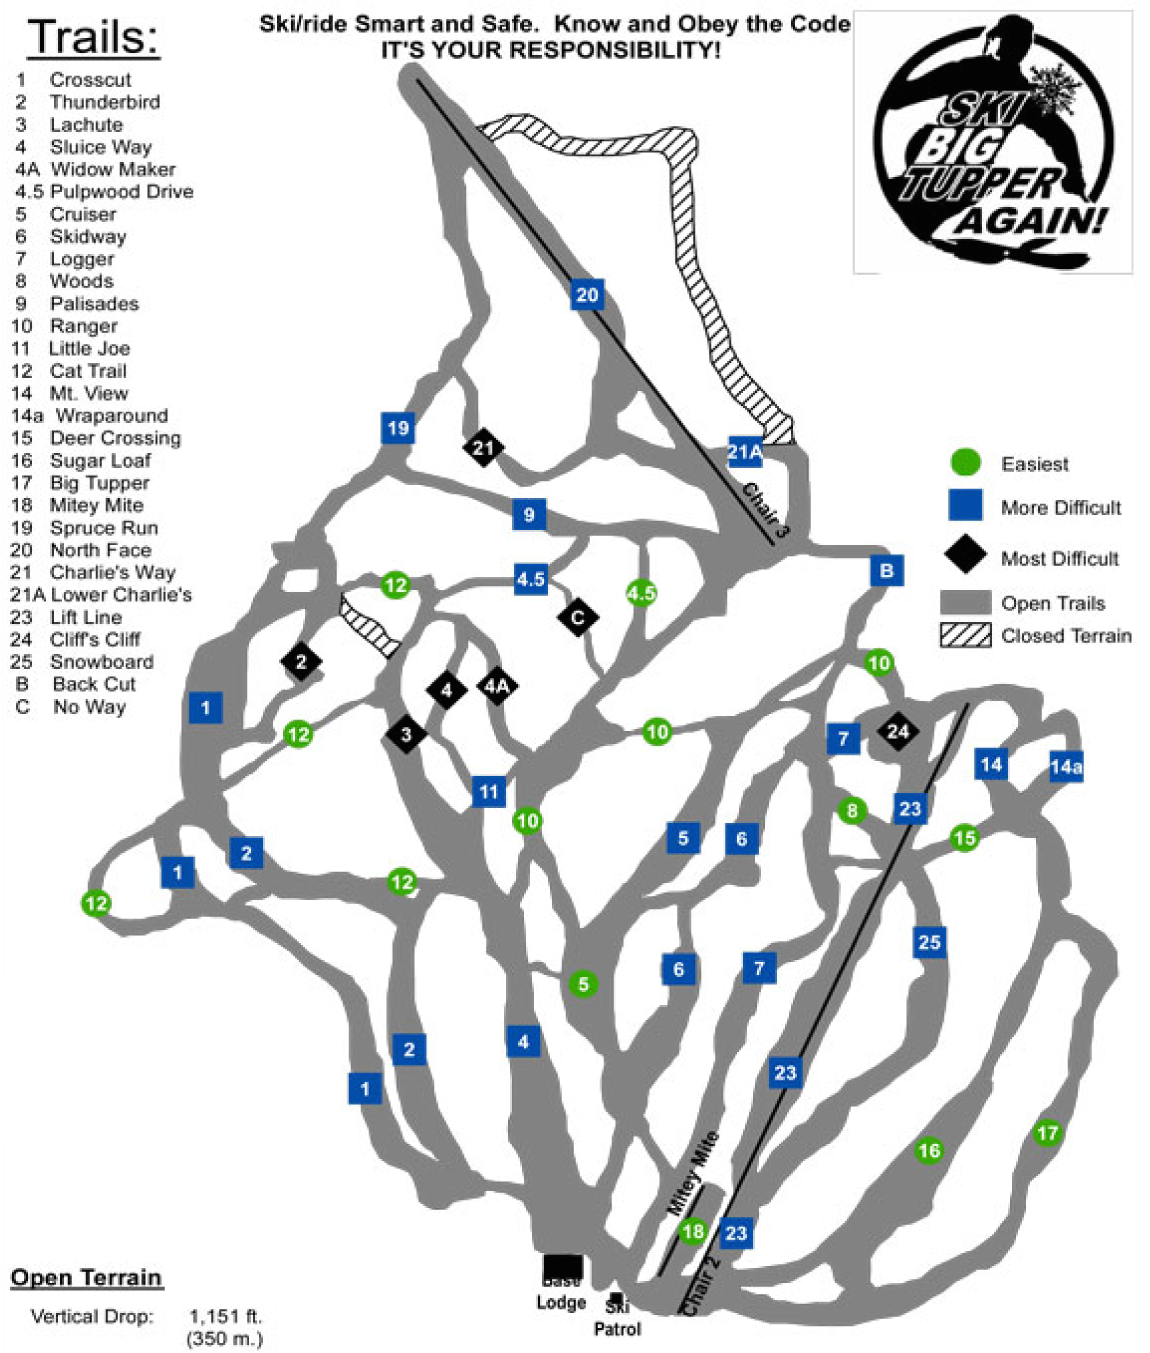 Big Tupper Ski Area trail map